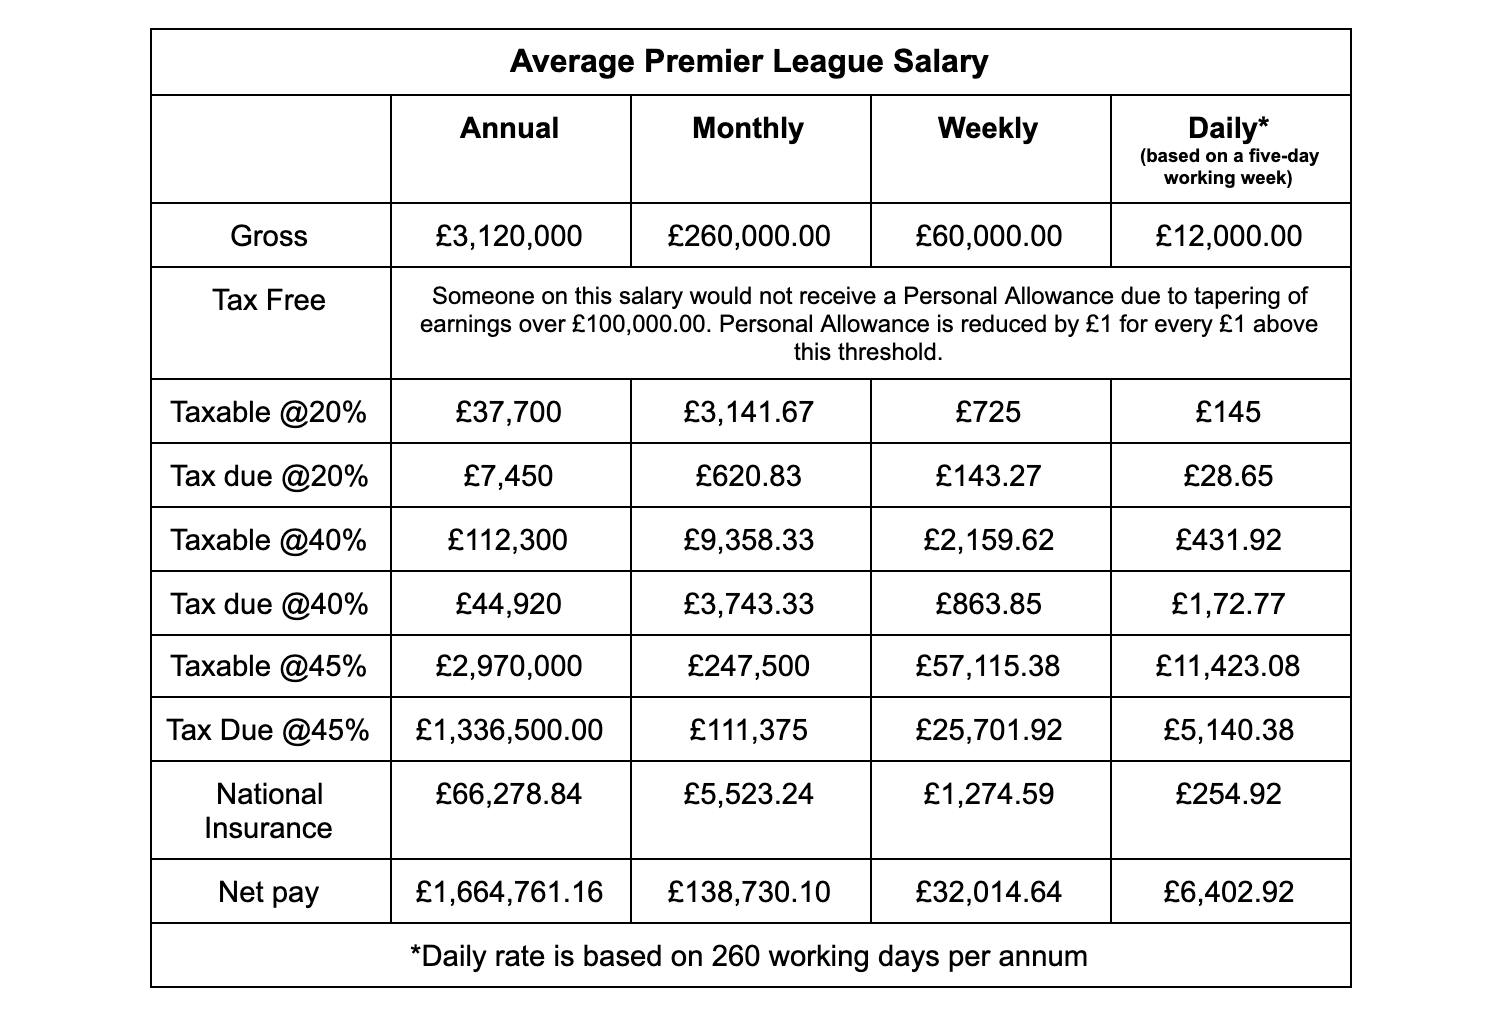 Average Premier League footballer salary broken down.